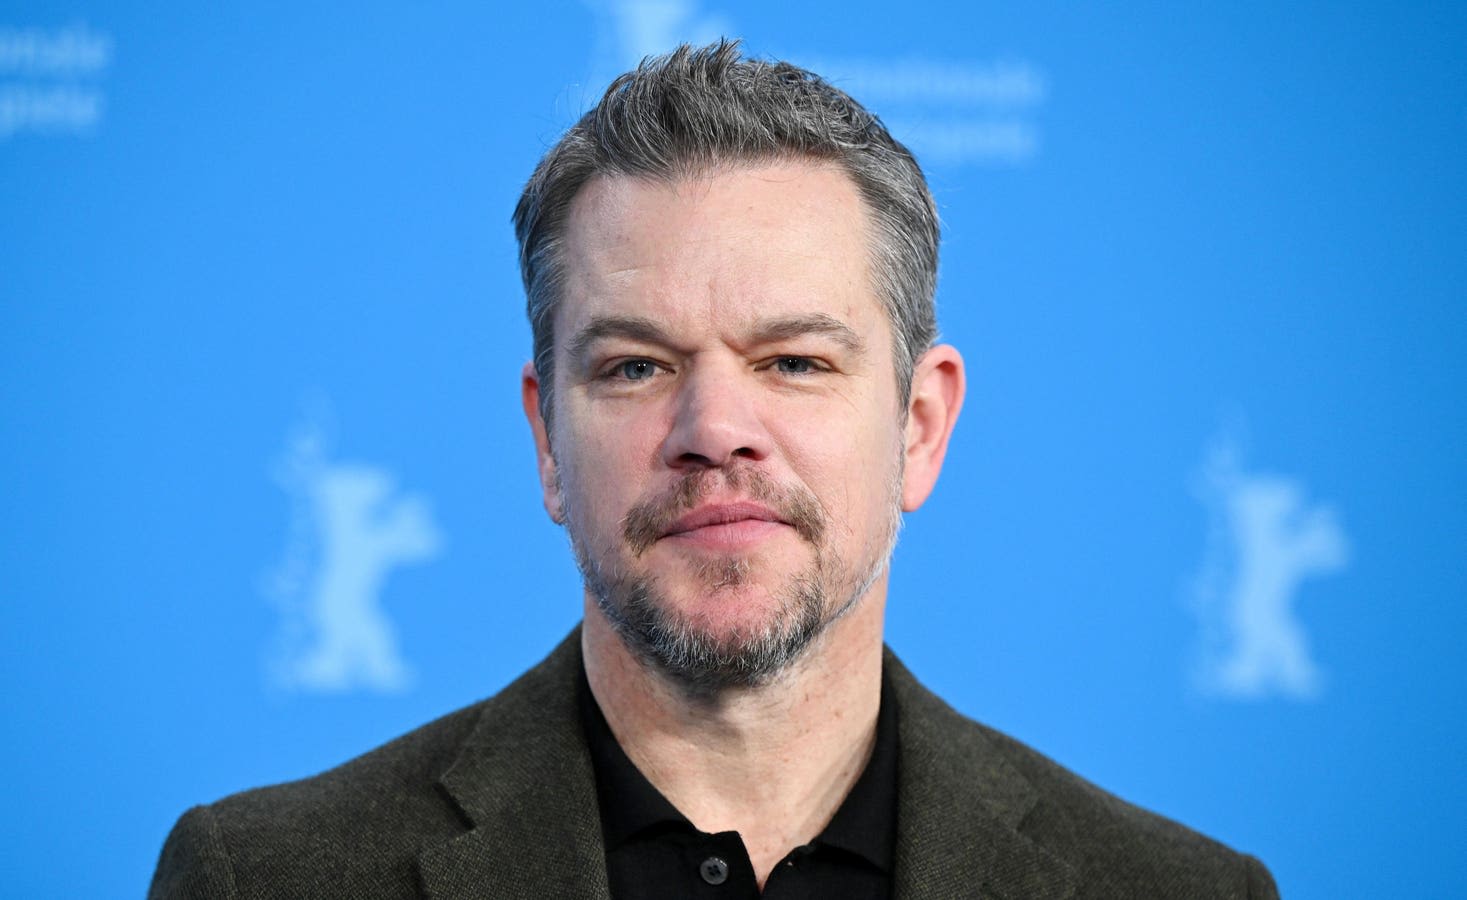 Matt Damon Movie Bust Debuts Big On Netflix U.S. Top 10 Movies Chart